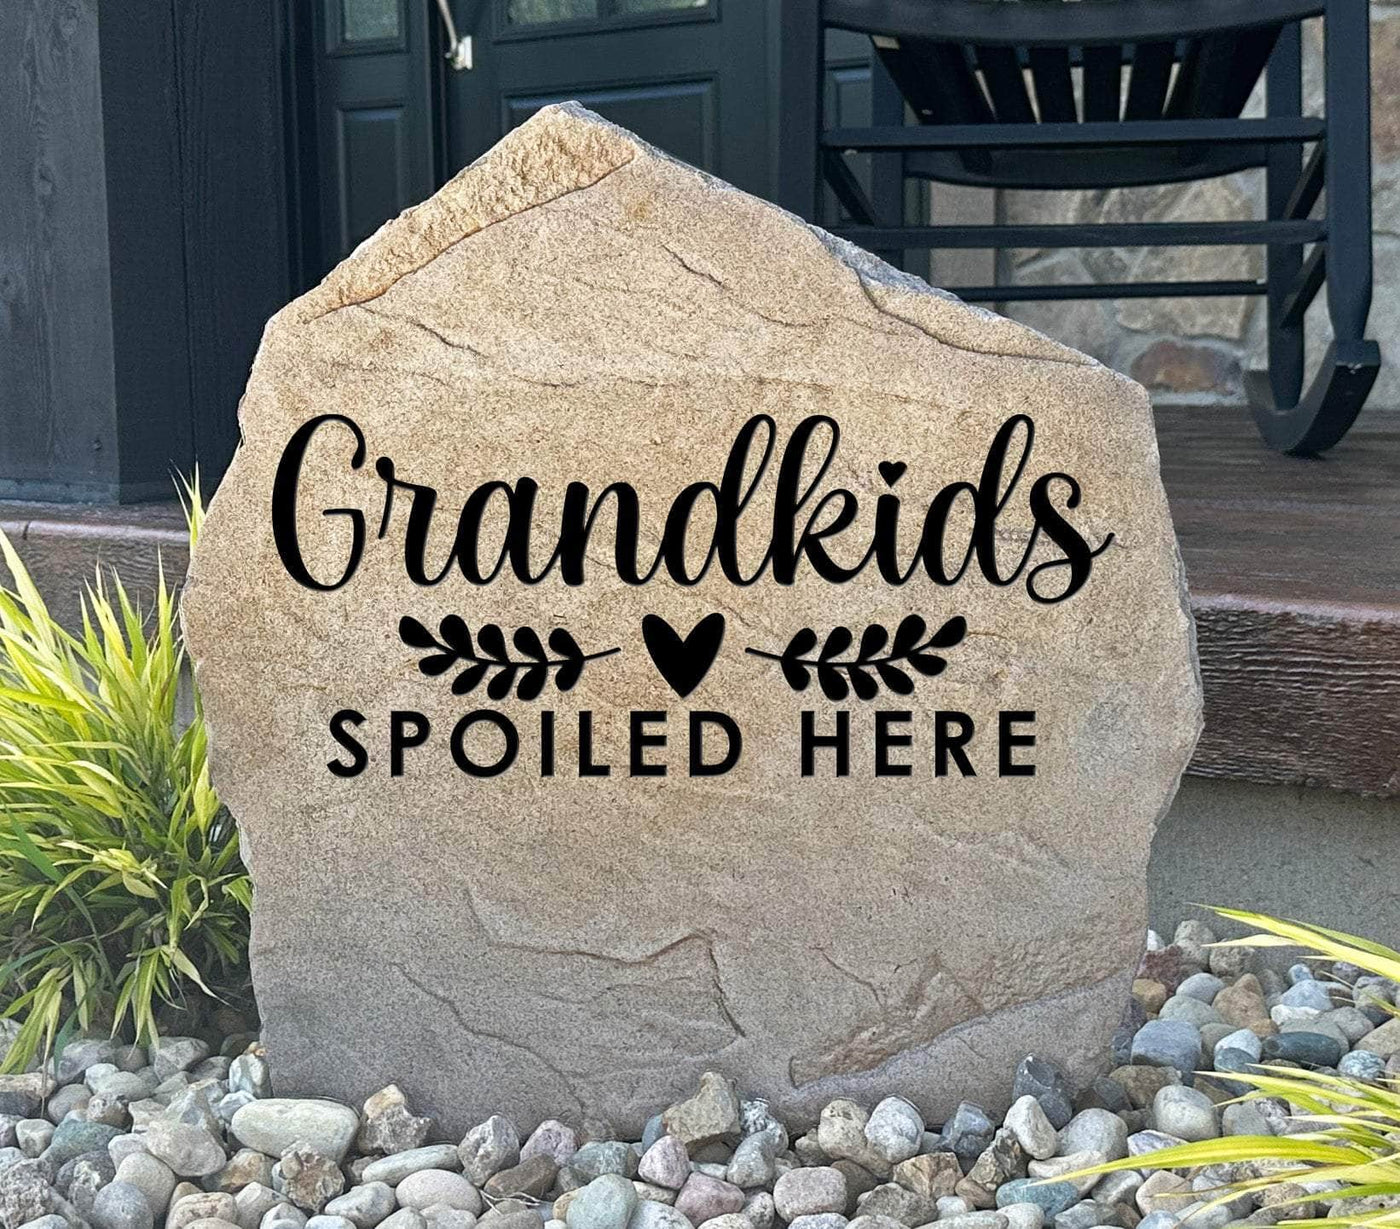 Grandkids Spoiled Here Stone